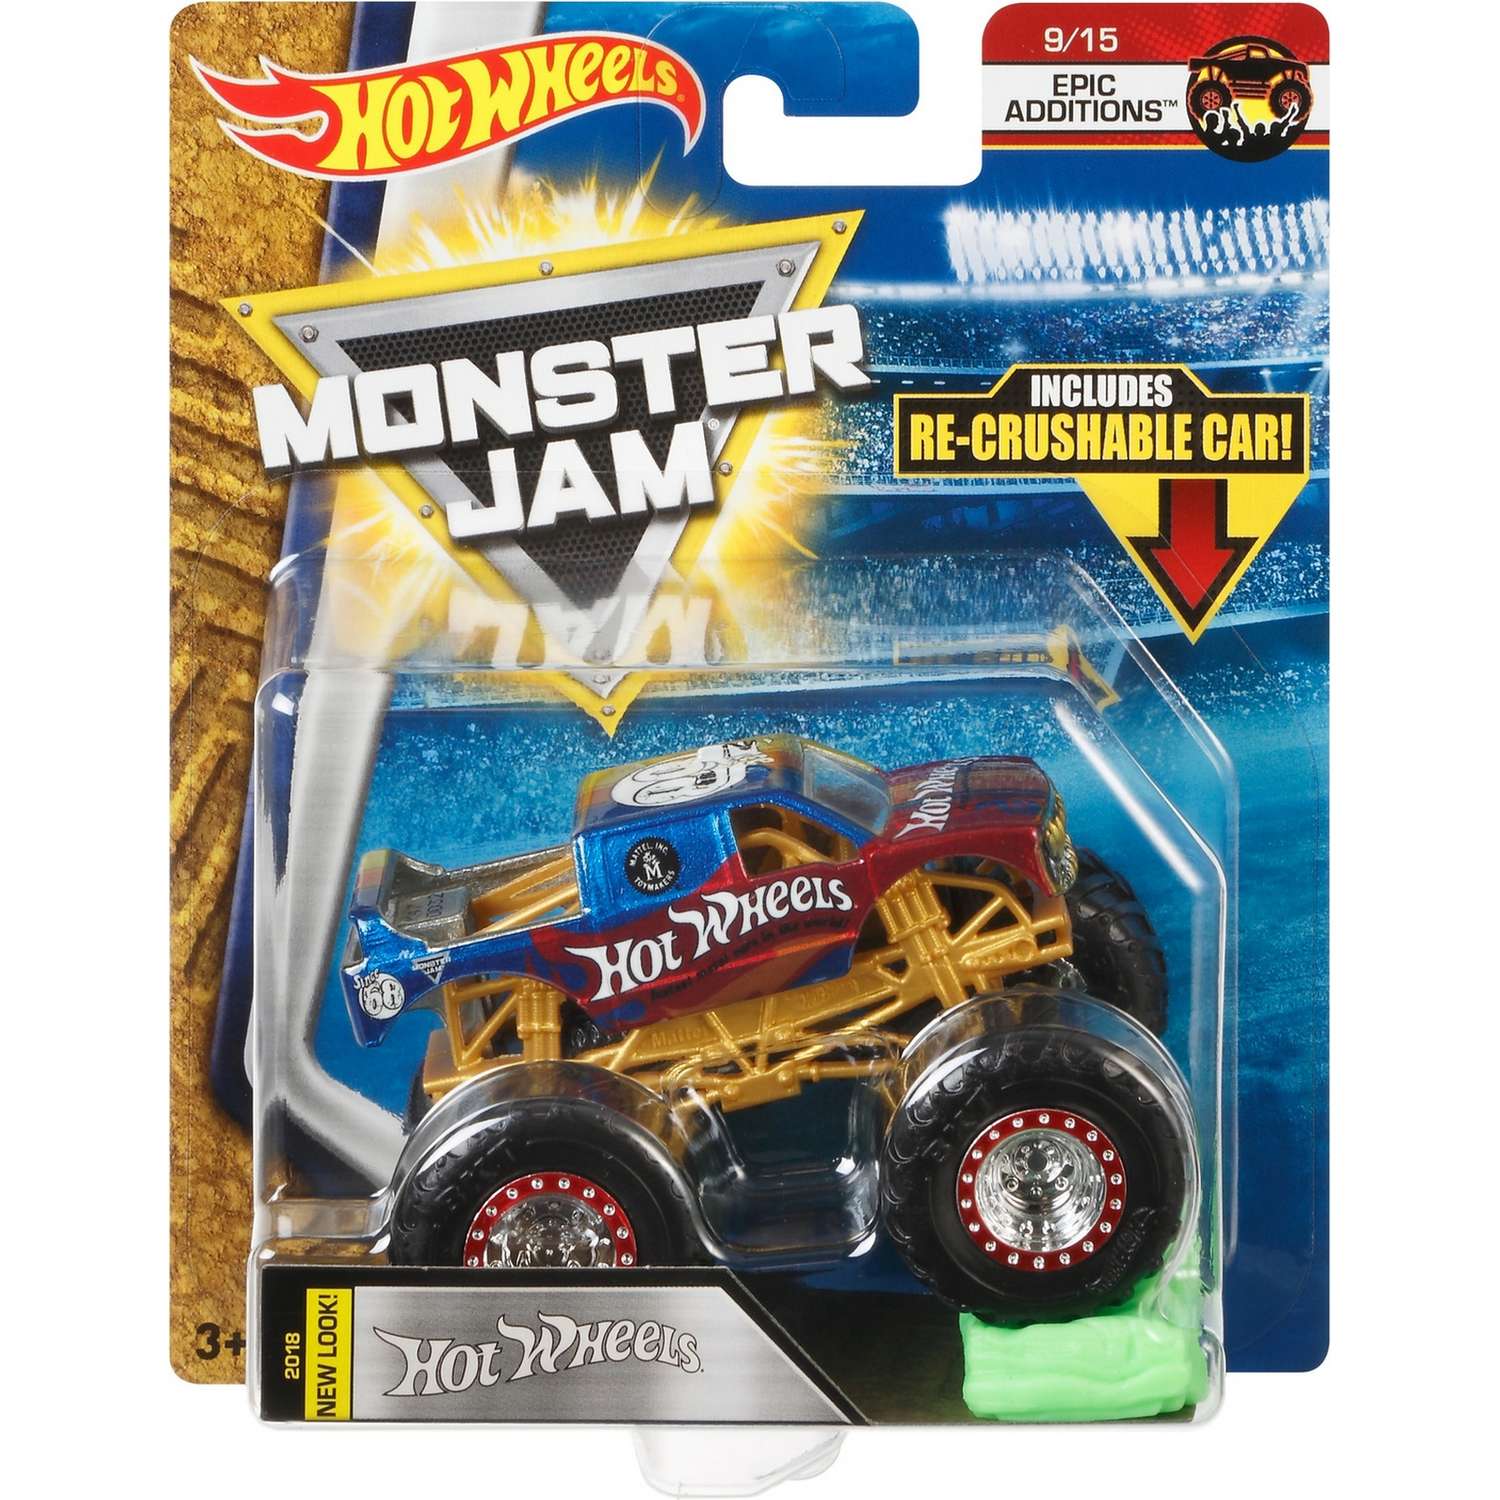 Машина Hot Wheels Monster Jam 1:64 Epic Edditions новый дизайн FLX01 21572 - фото 2